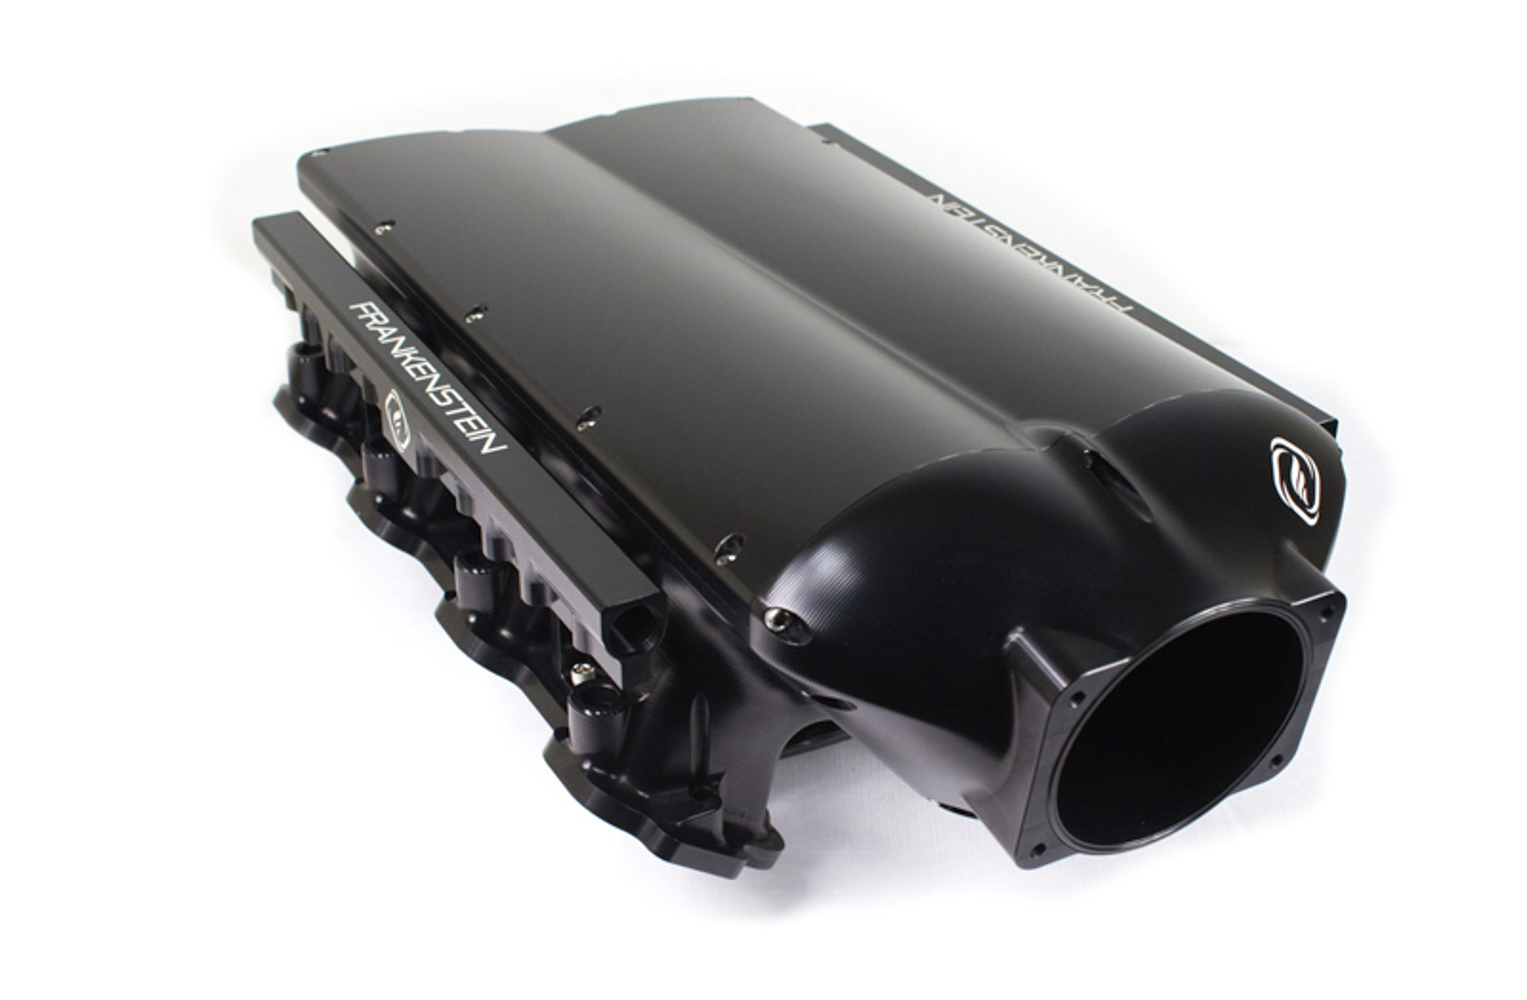 Frankenstein Engine 213001-BLK Intake Manifold, LowPro, Fuel Rails Included, Aluminum, Black Anodized, LS3, GM LS-Series, Kit